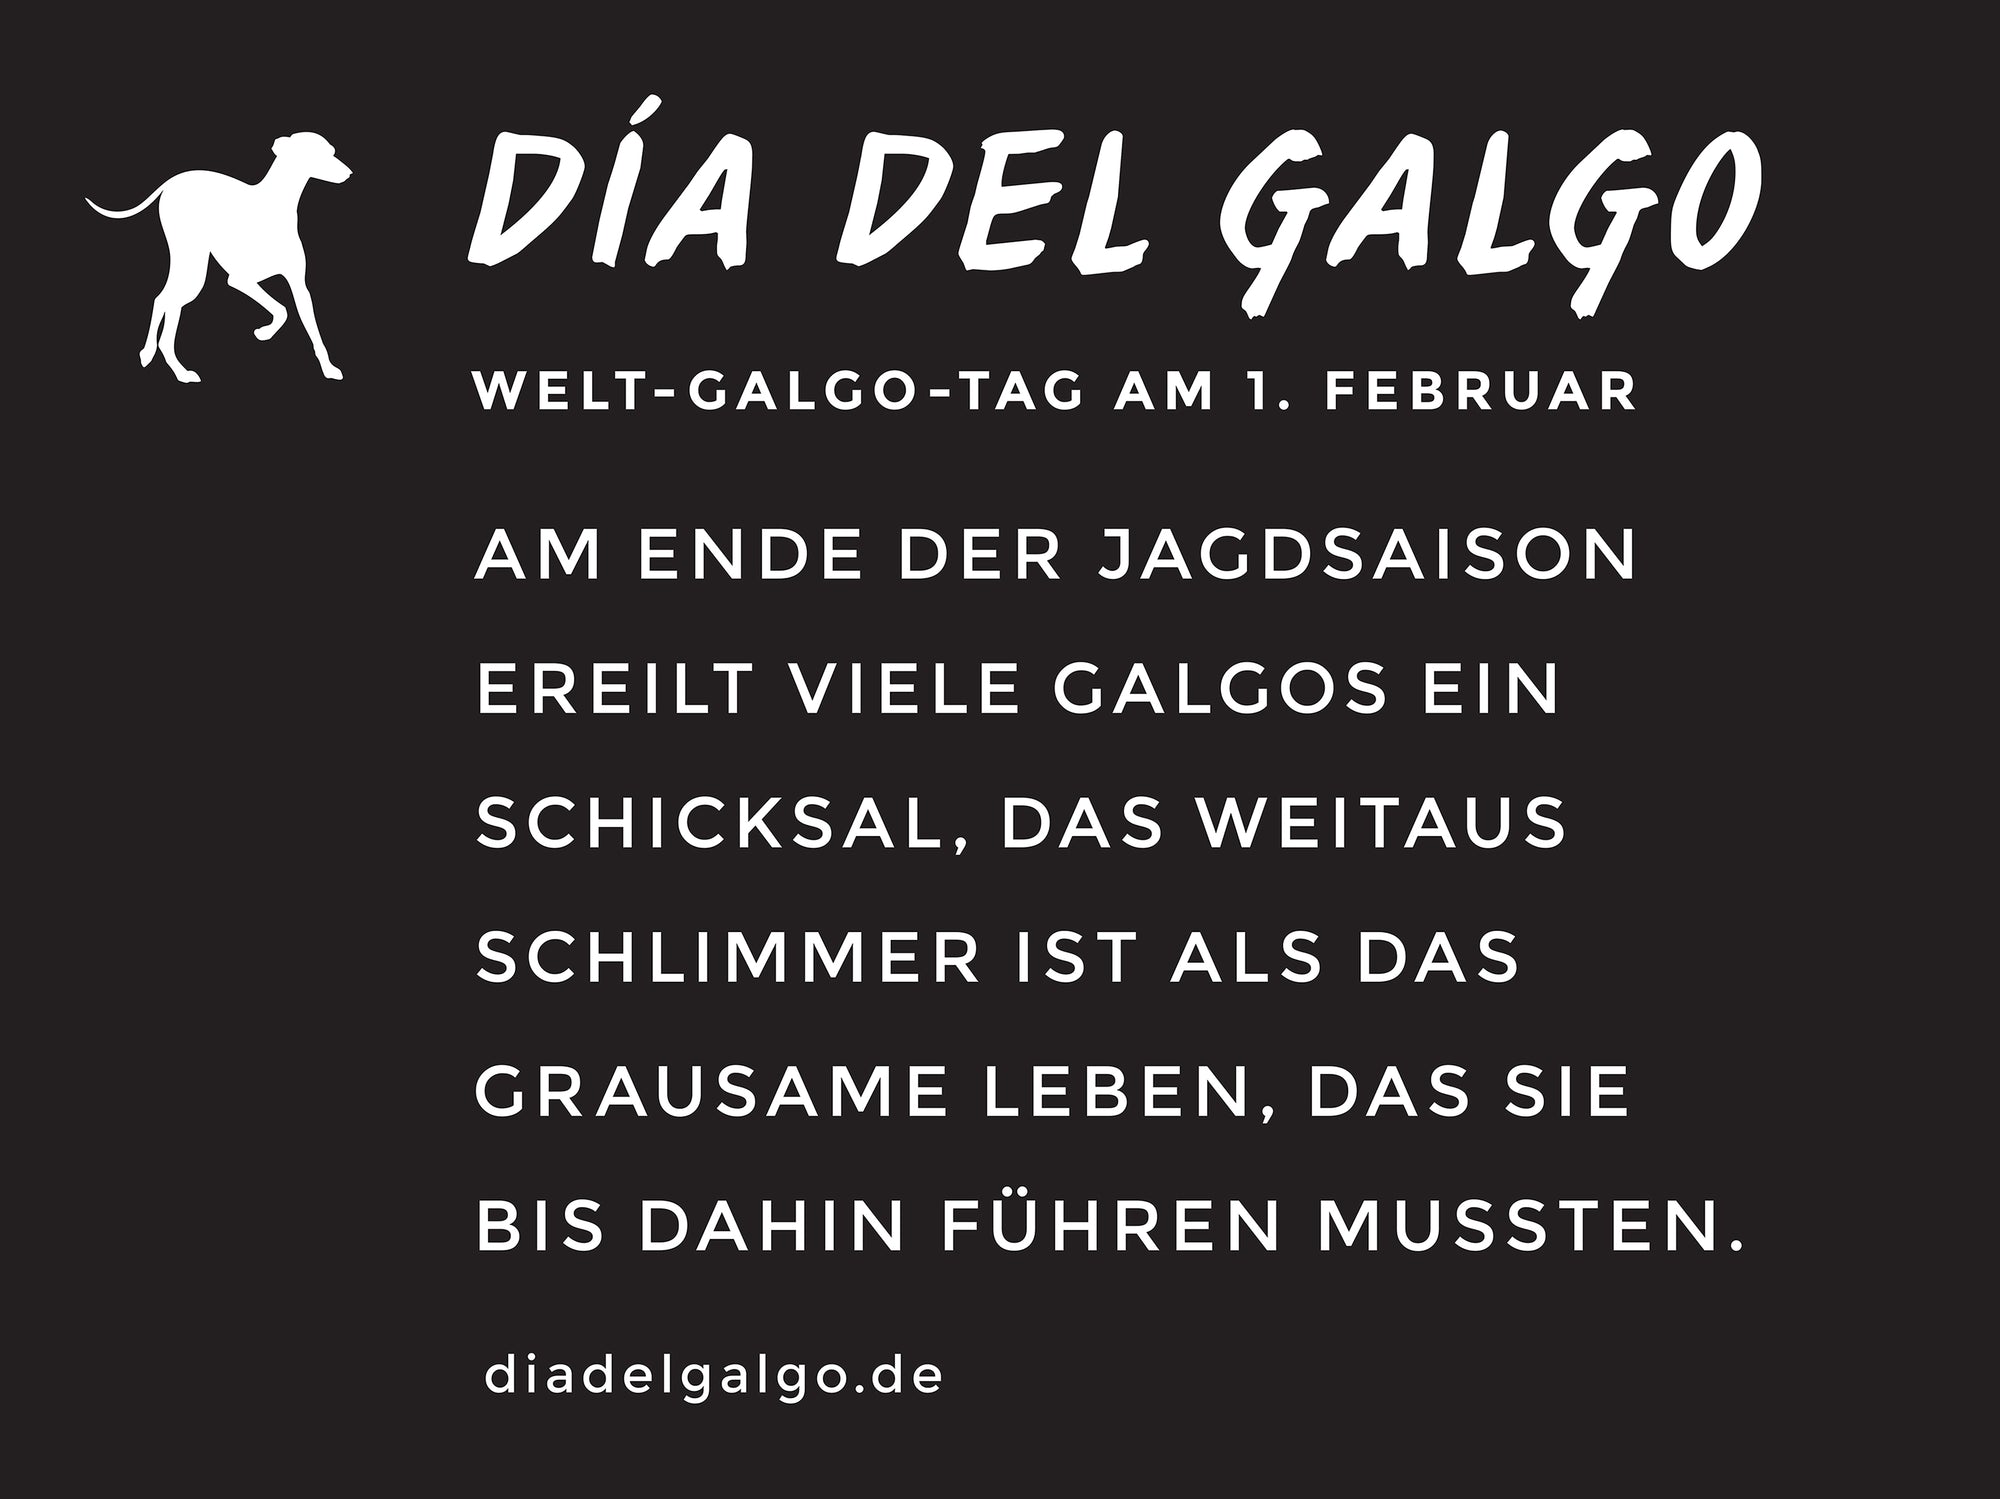 INFO | Aktion zum Welt-Galgo-Tag am 1.2.